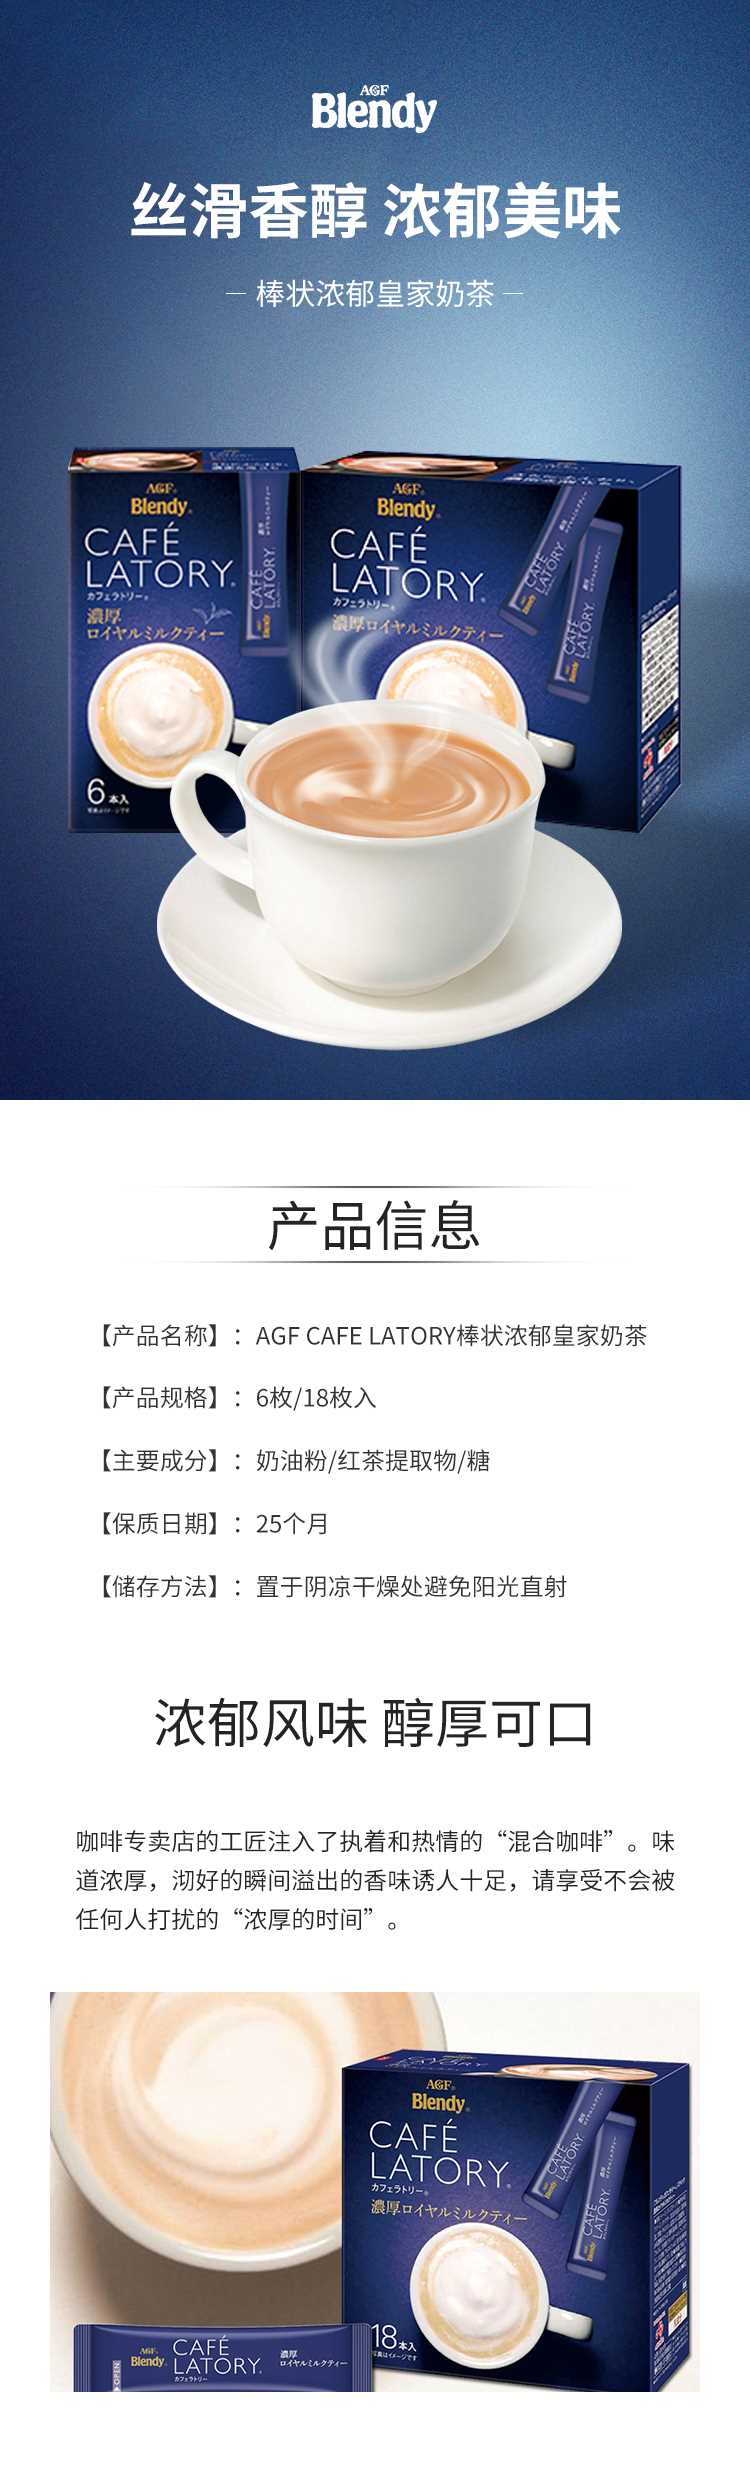 AGF-CAFE-LATORY棒状浓郁皇家奶茶6枚18枚入_01.jpg